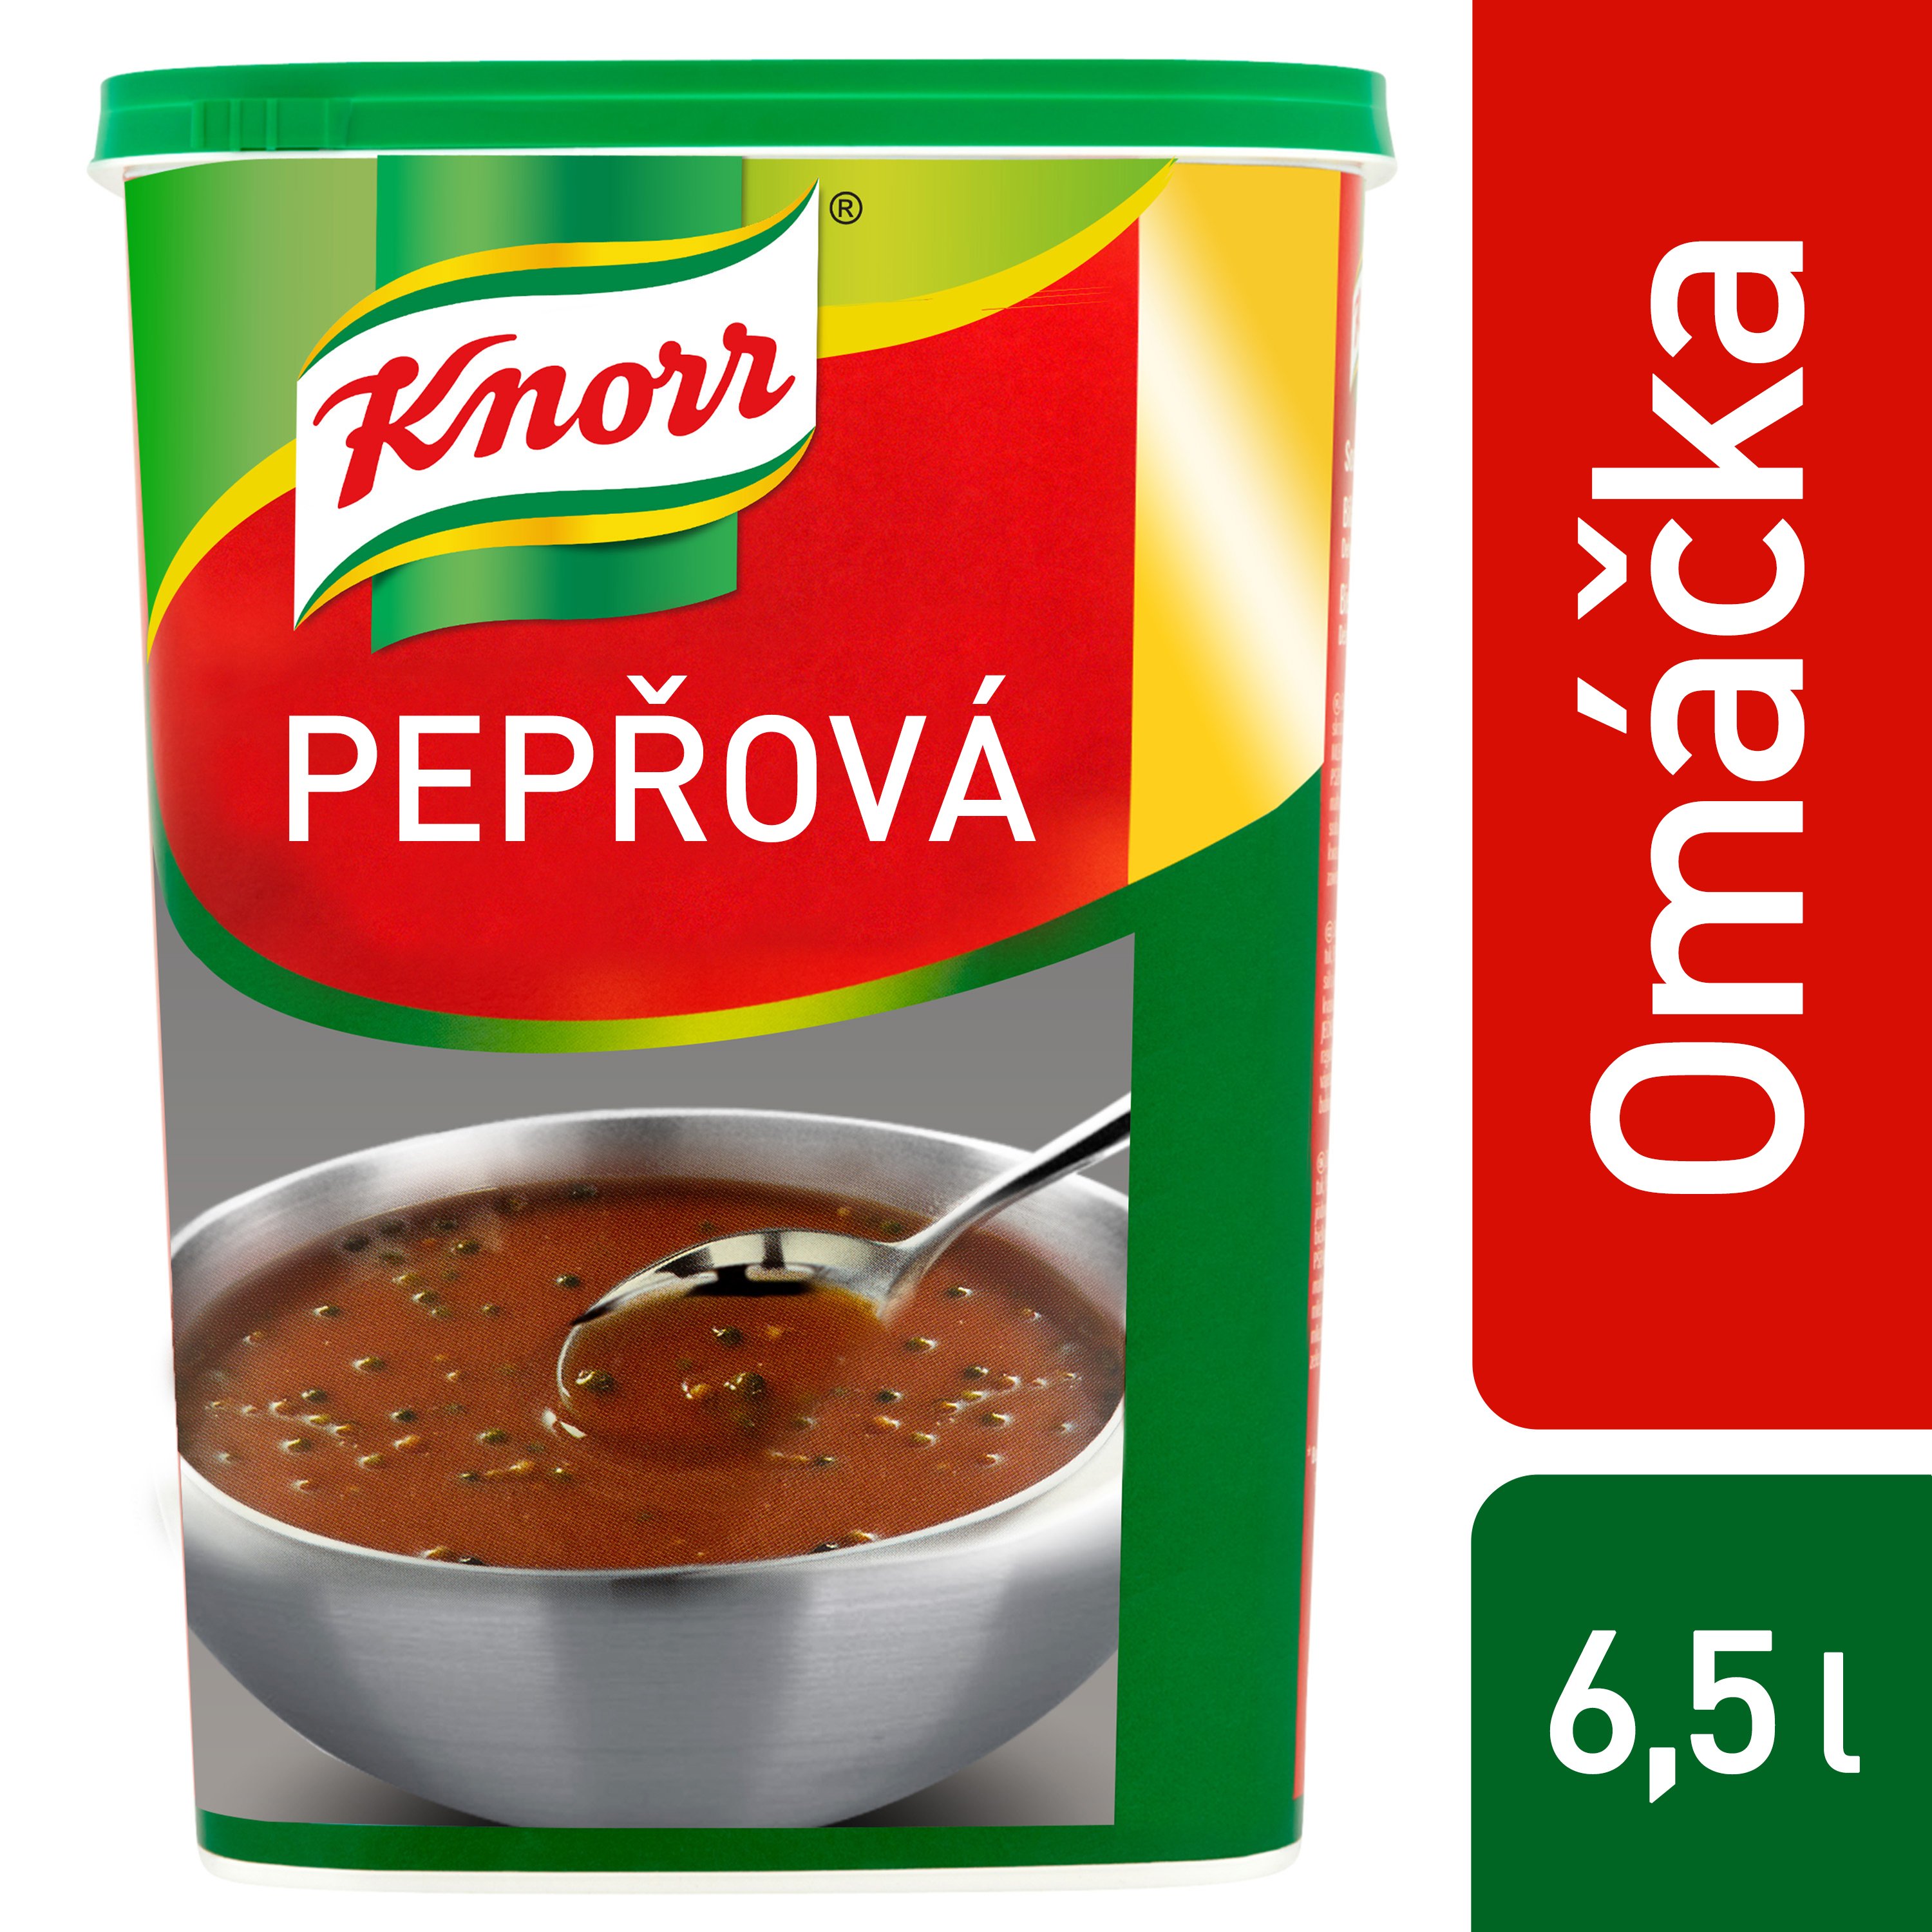 Knorr Pepřová omáčka 0,85 kg - 